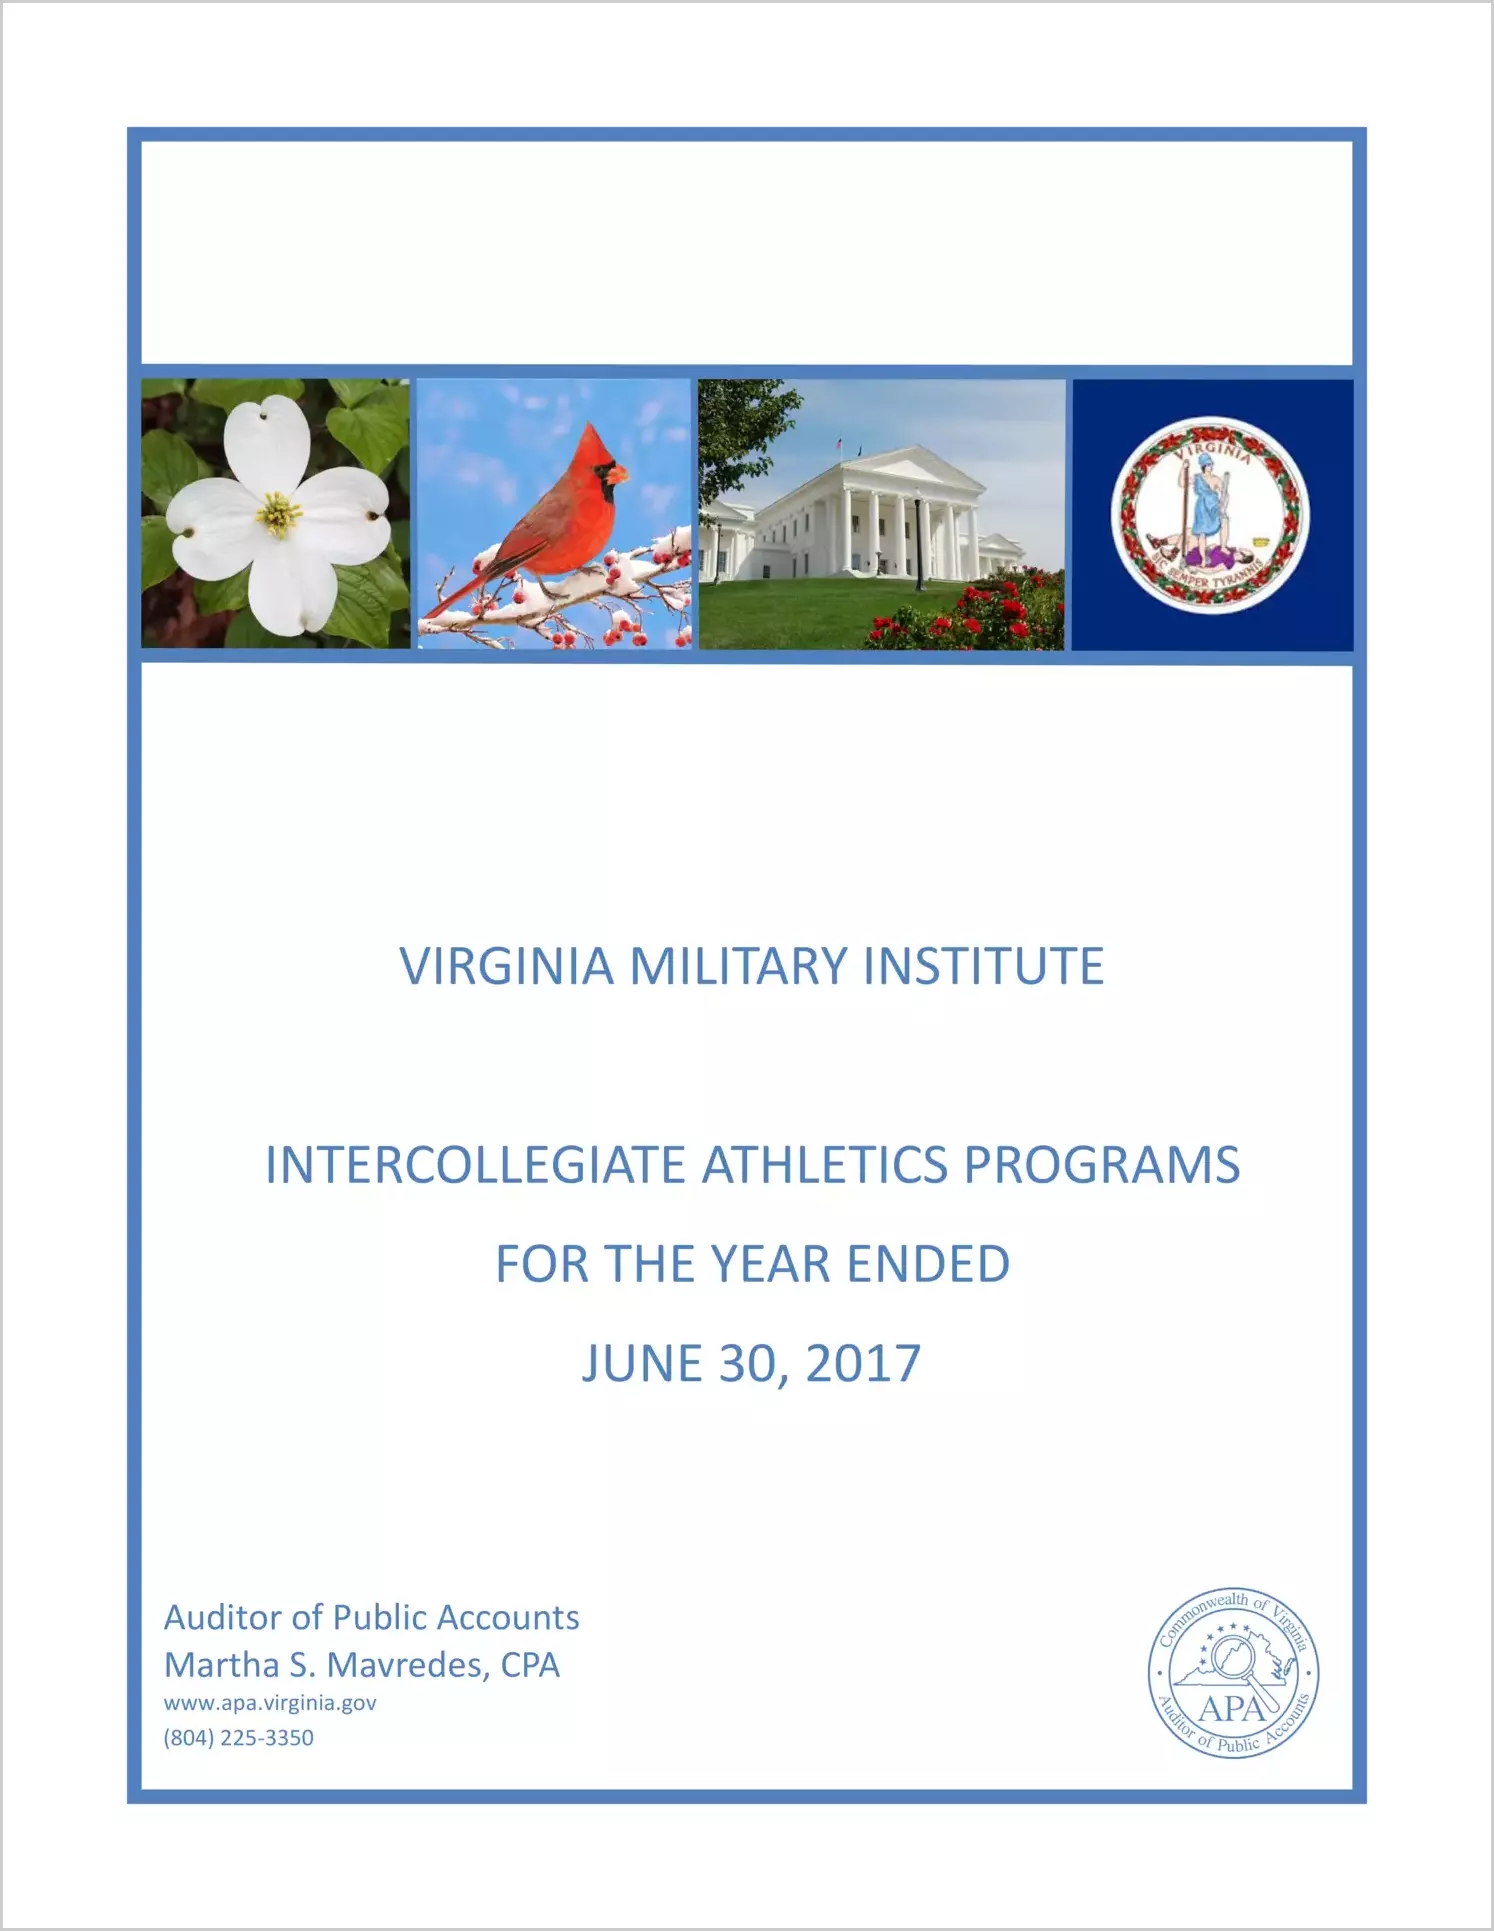 Virginia Military Institute Intercollegiate Athletics Programs for the year ended June 30, 2017